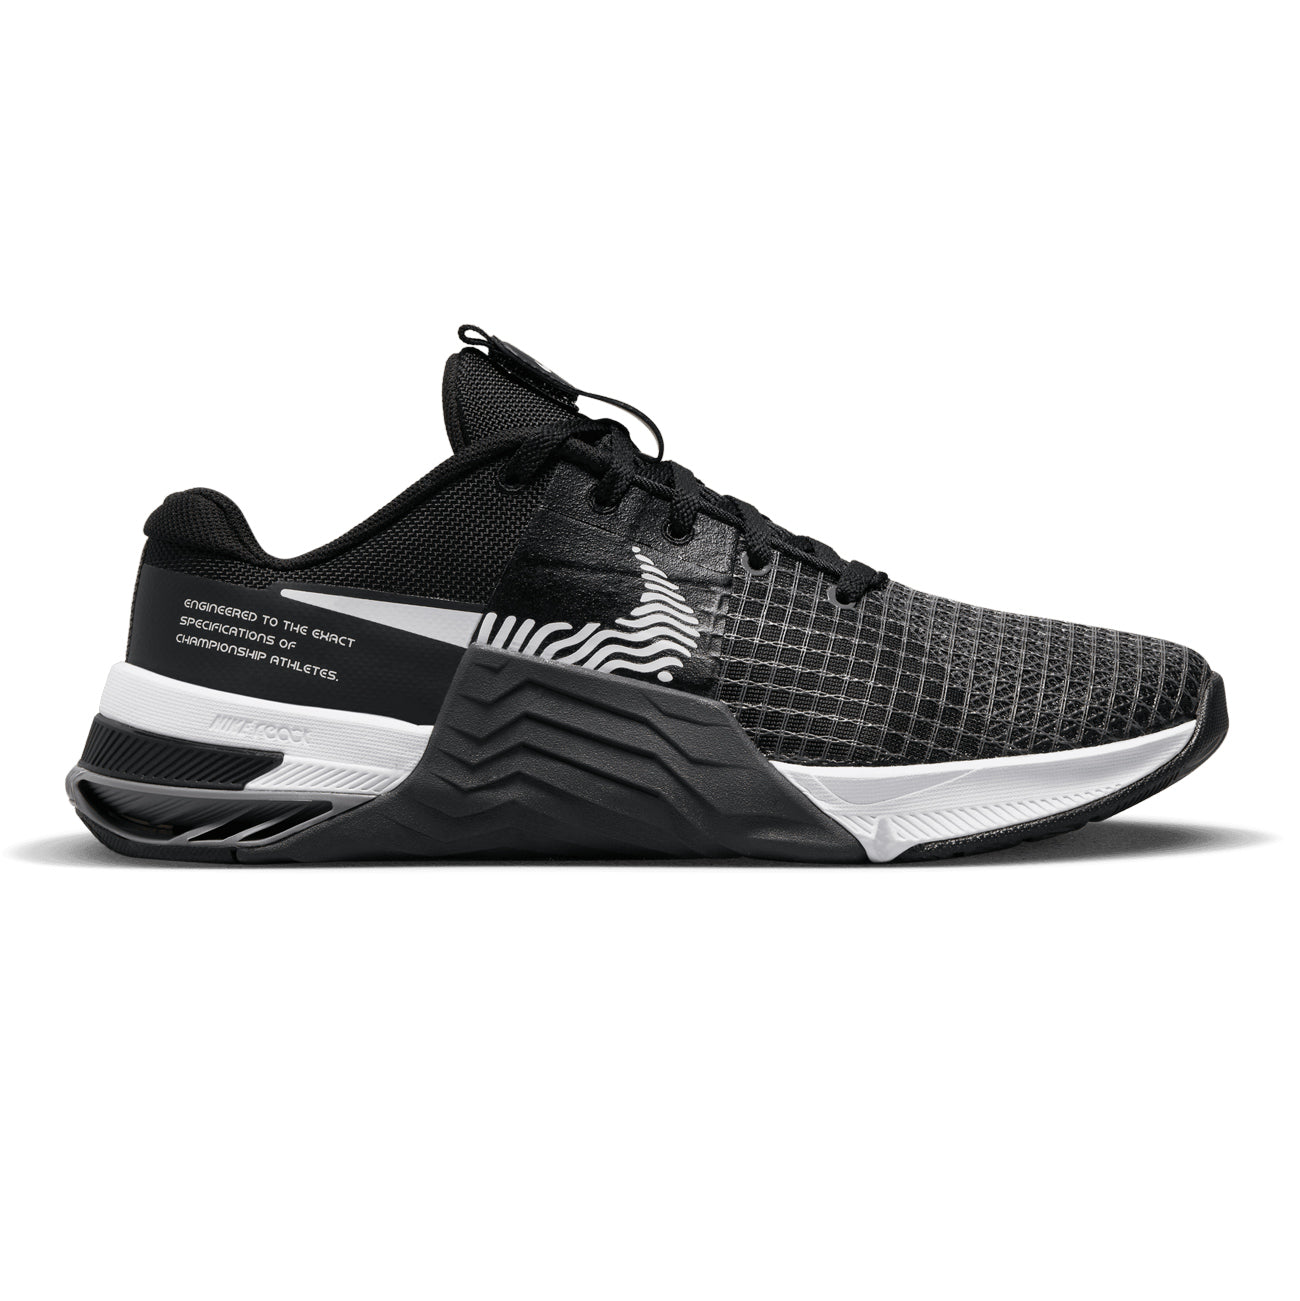 Nike Womens Sportswear Air Tights (Black/Dark Smoke Grey/White)